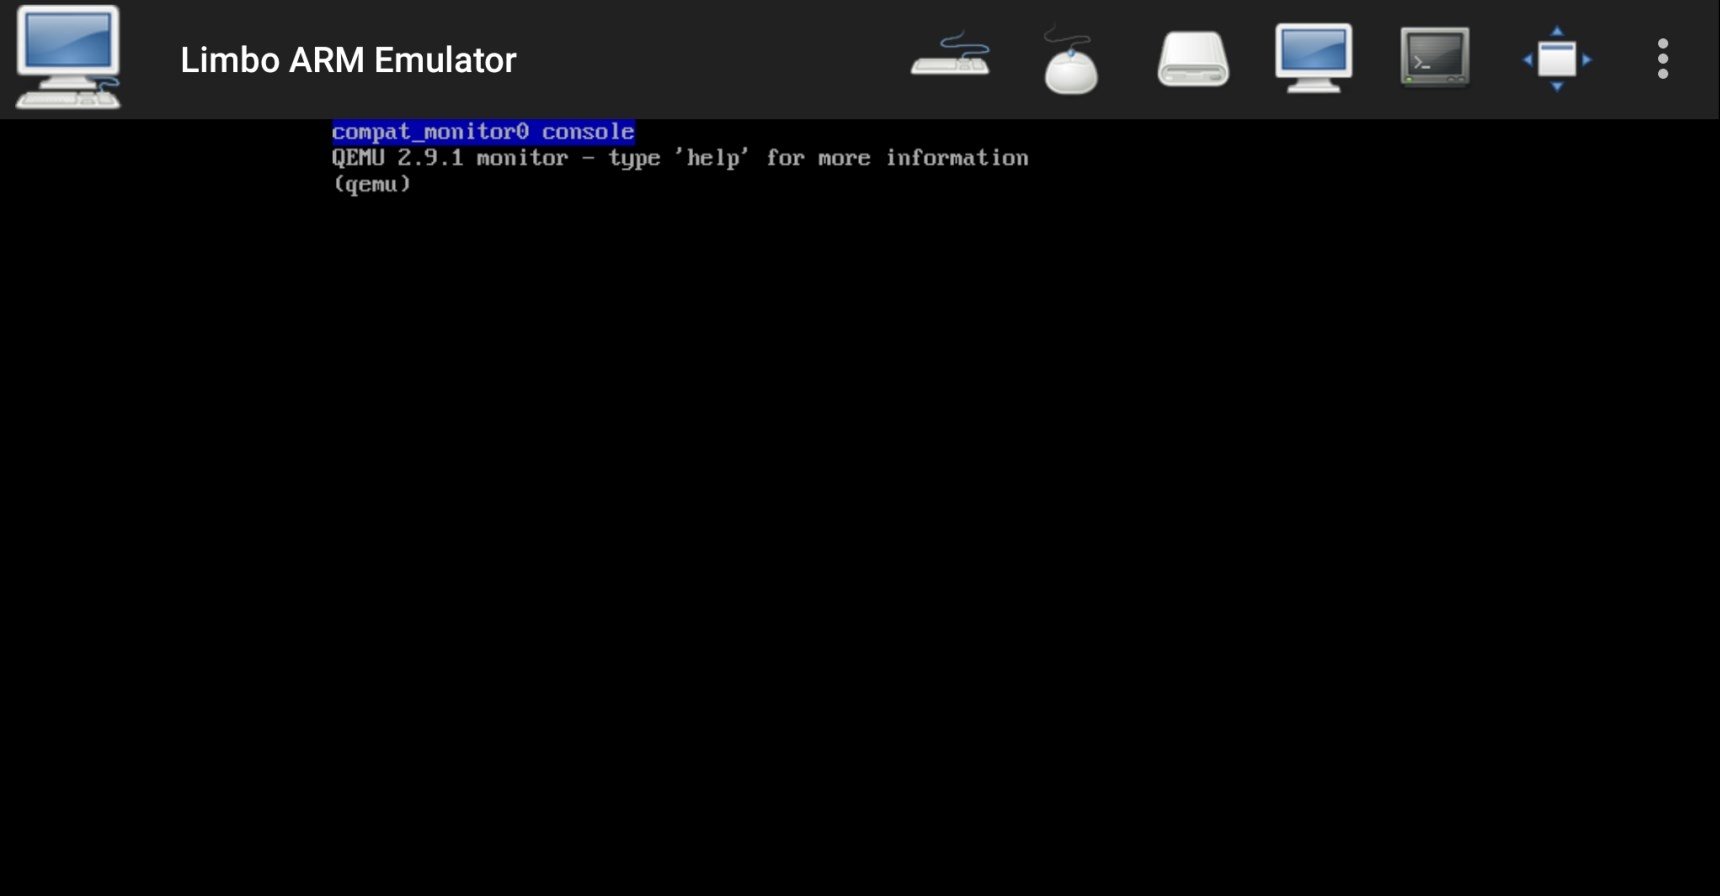 limbo pc emulator apk for samsung galaxy s2